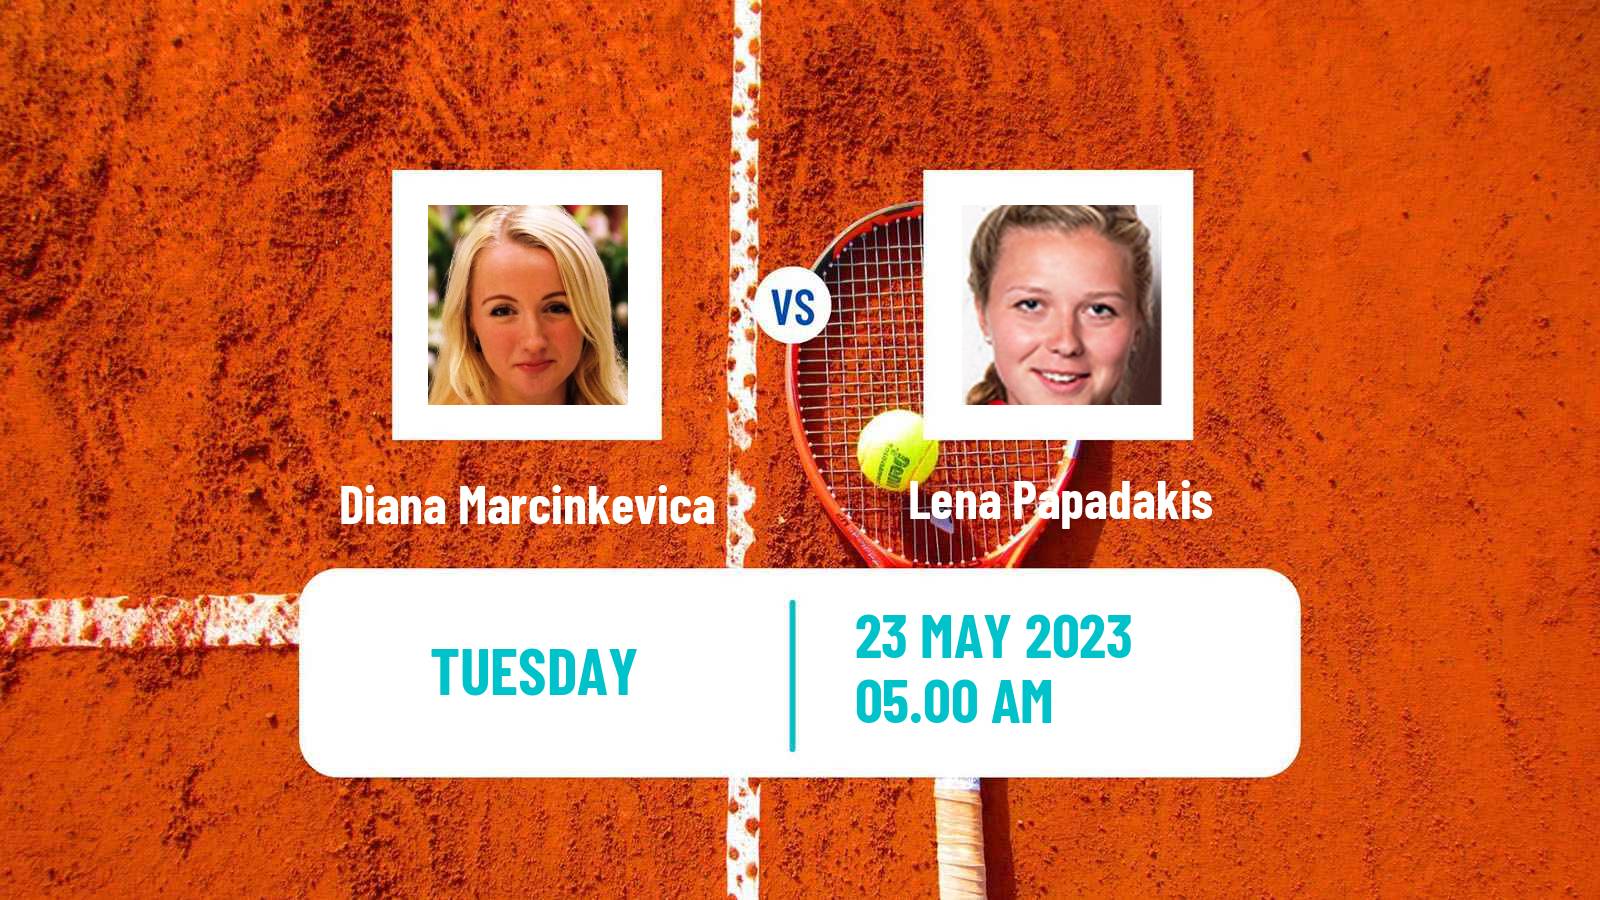 Tennis ITF W25 Warmbad Villach Women Diana Marcinkevica - Lena Papadakis